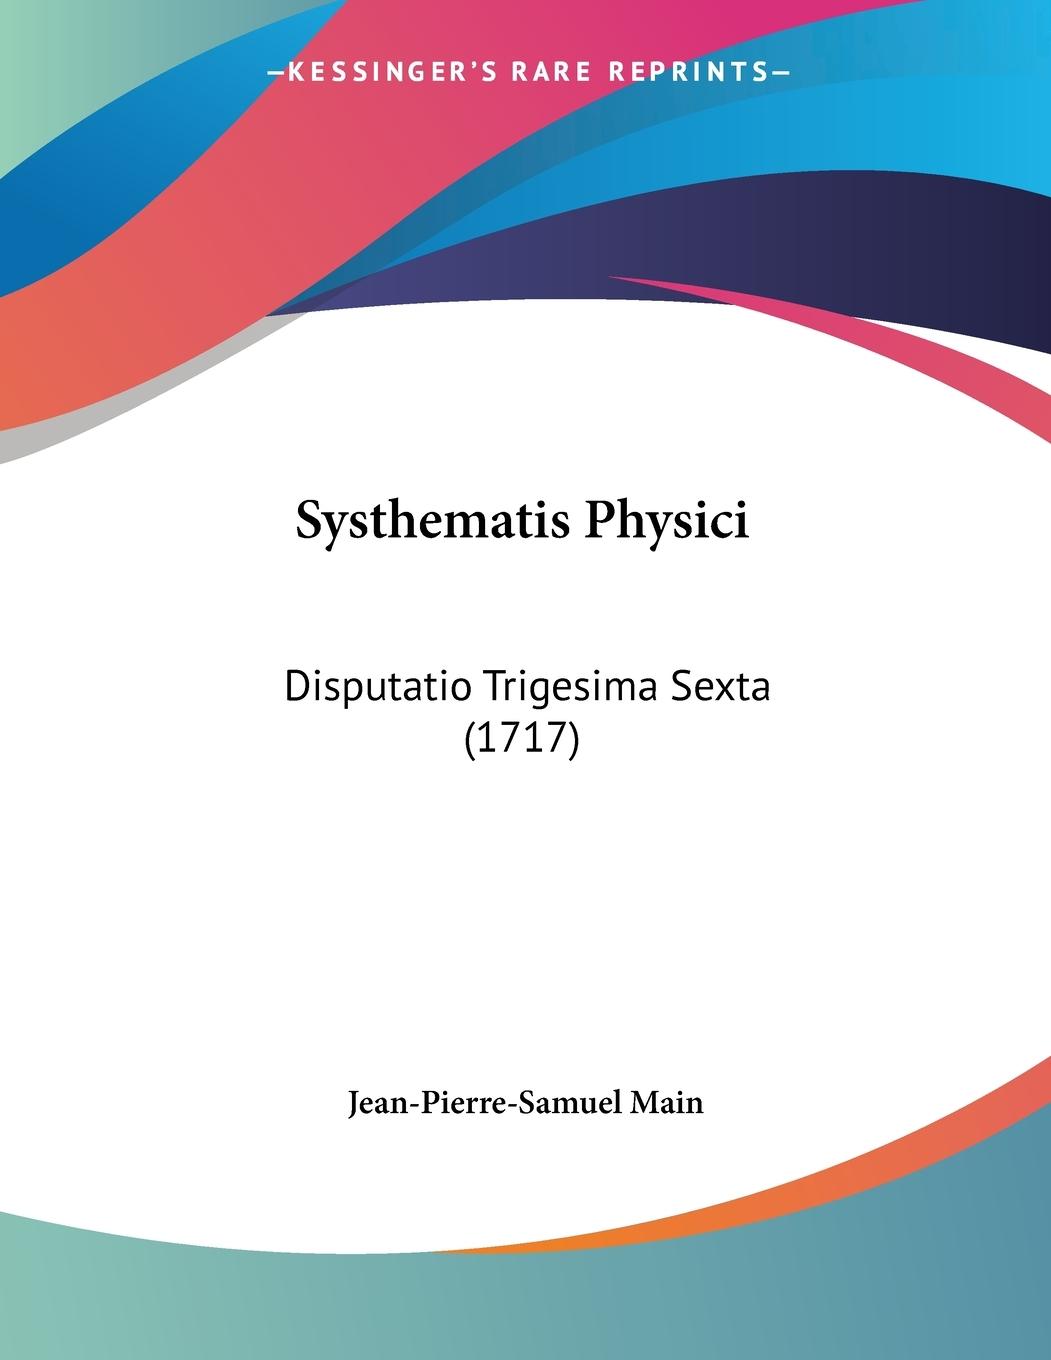 Systhematis Physici - Main, Jean-Pierre-Samuel